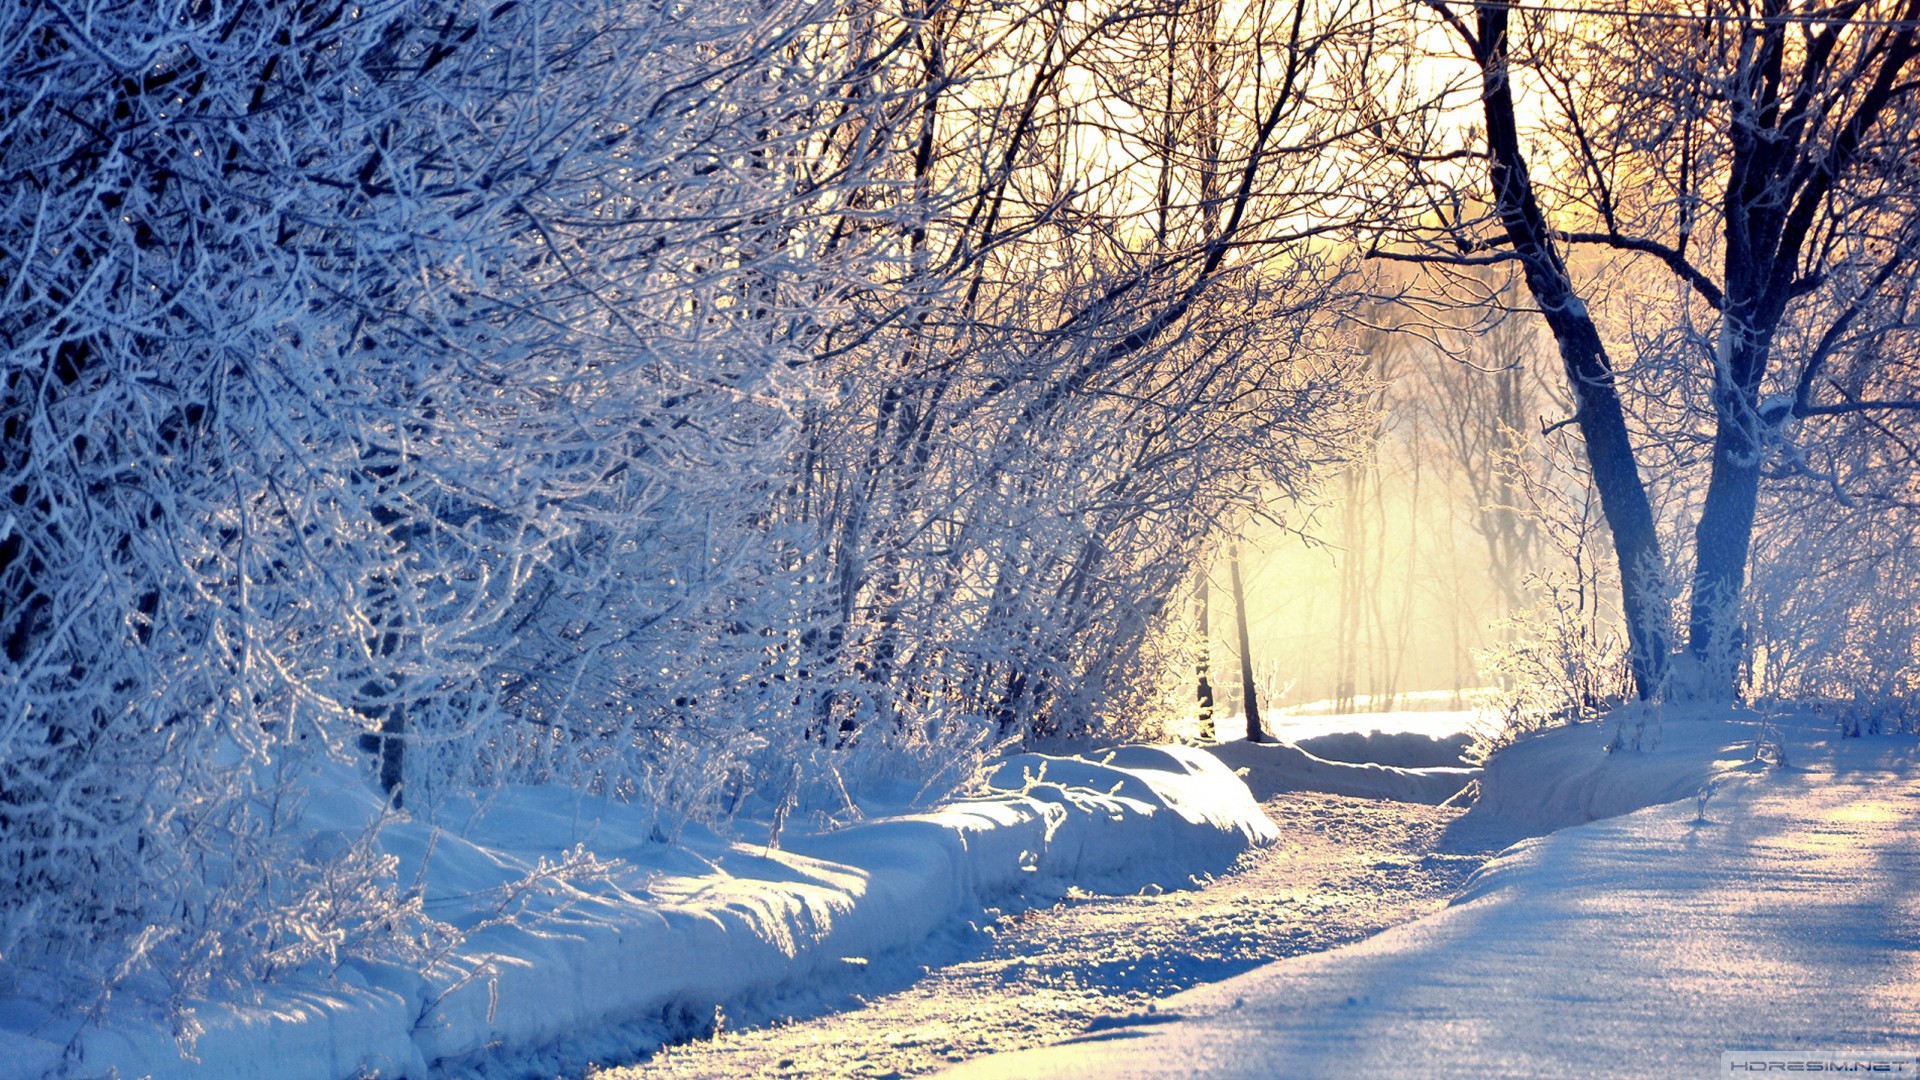 kış,kar,ağaç,yol,güneş